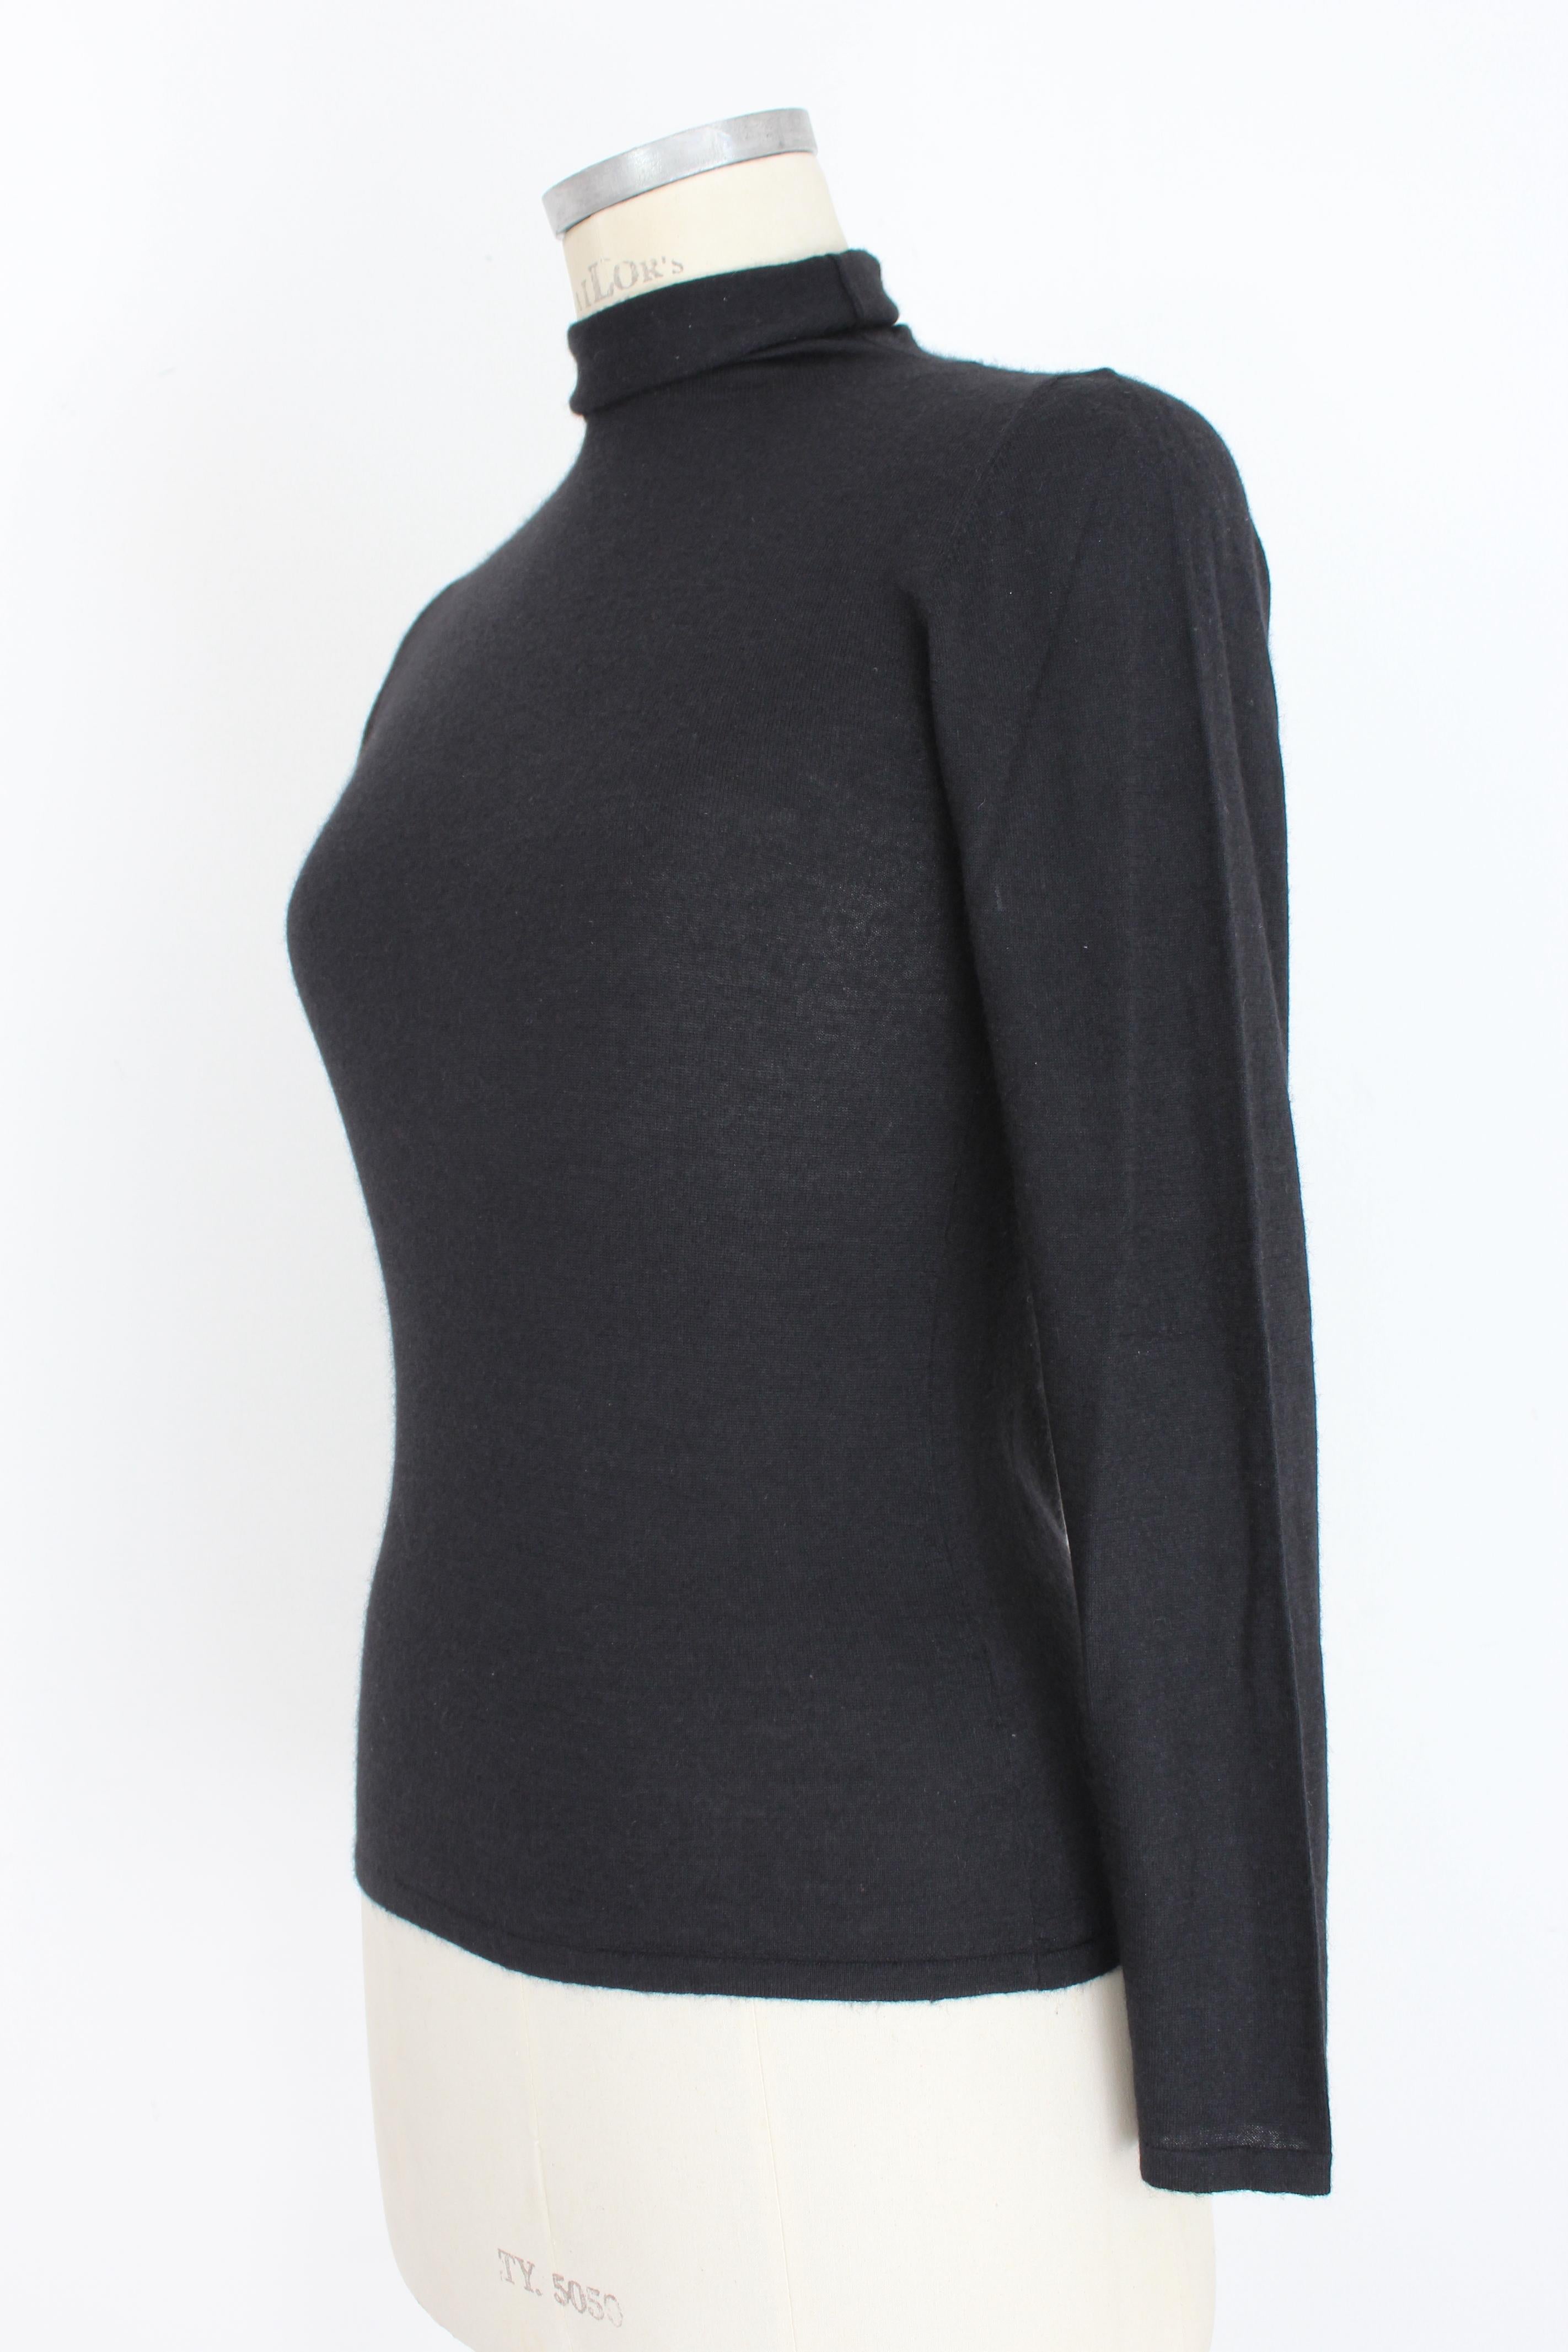 Women's Brunello Cucinelli Black Cashmere Silk Turtleneck Sweater